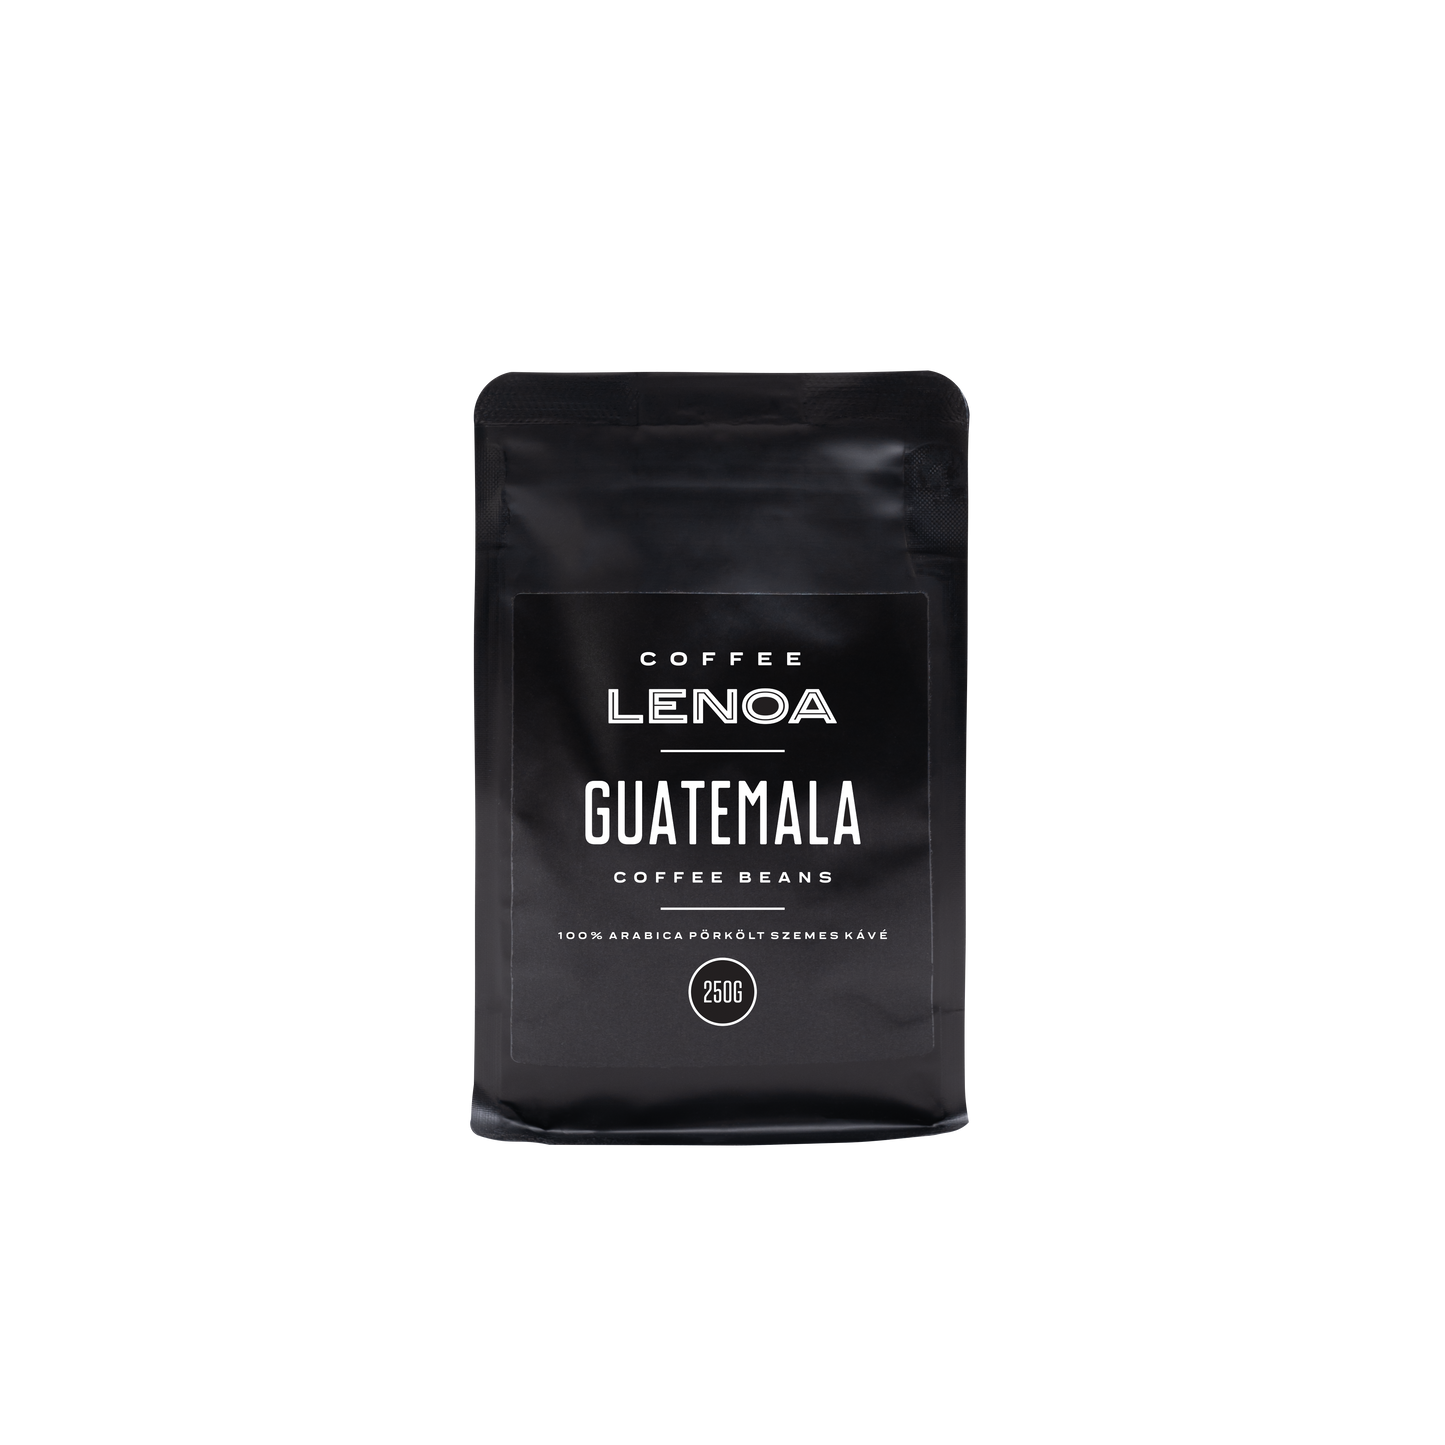 Coffee Lenoa Guatemala - Coffee beans 250 g